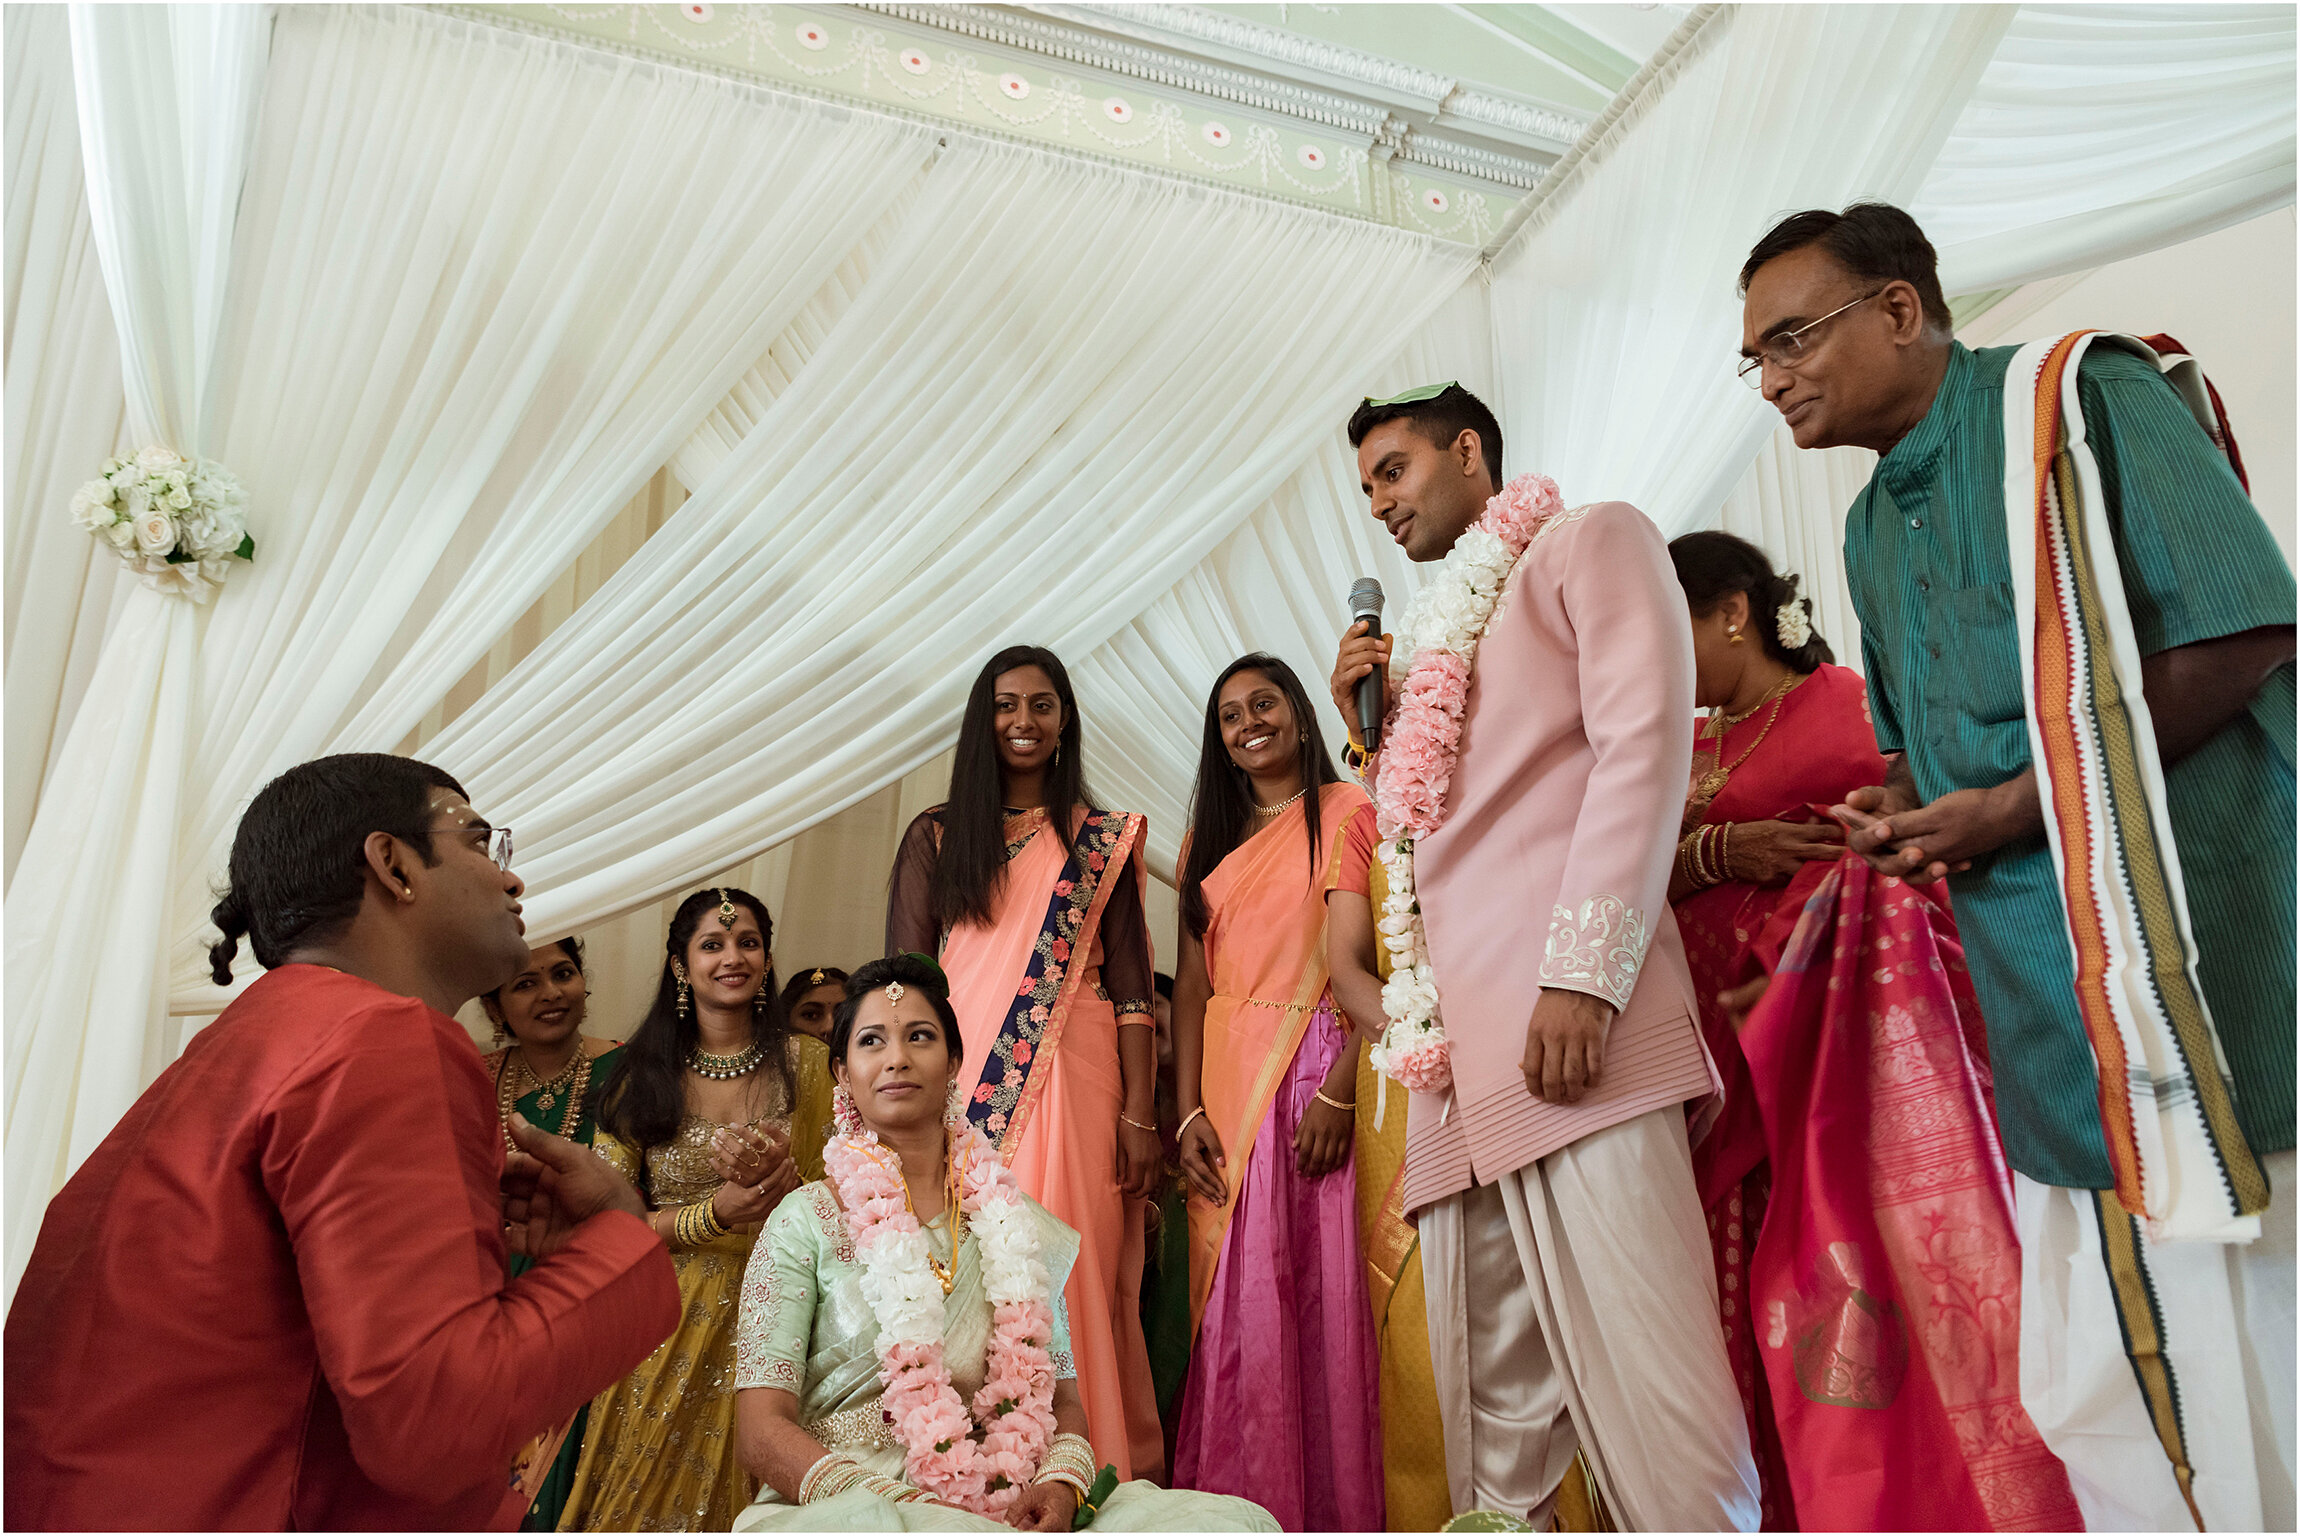 ©FianderFoto_Hindu Wedding_Bermuda_055.jpg